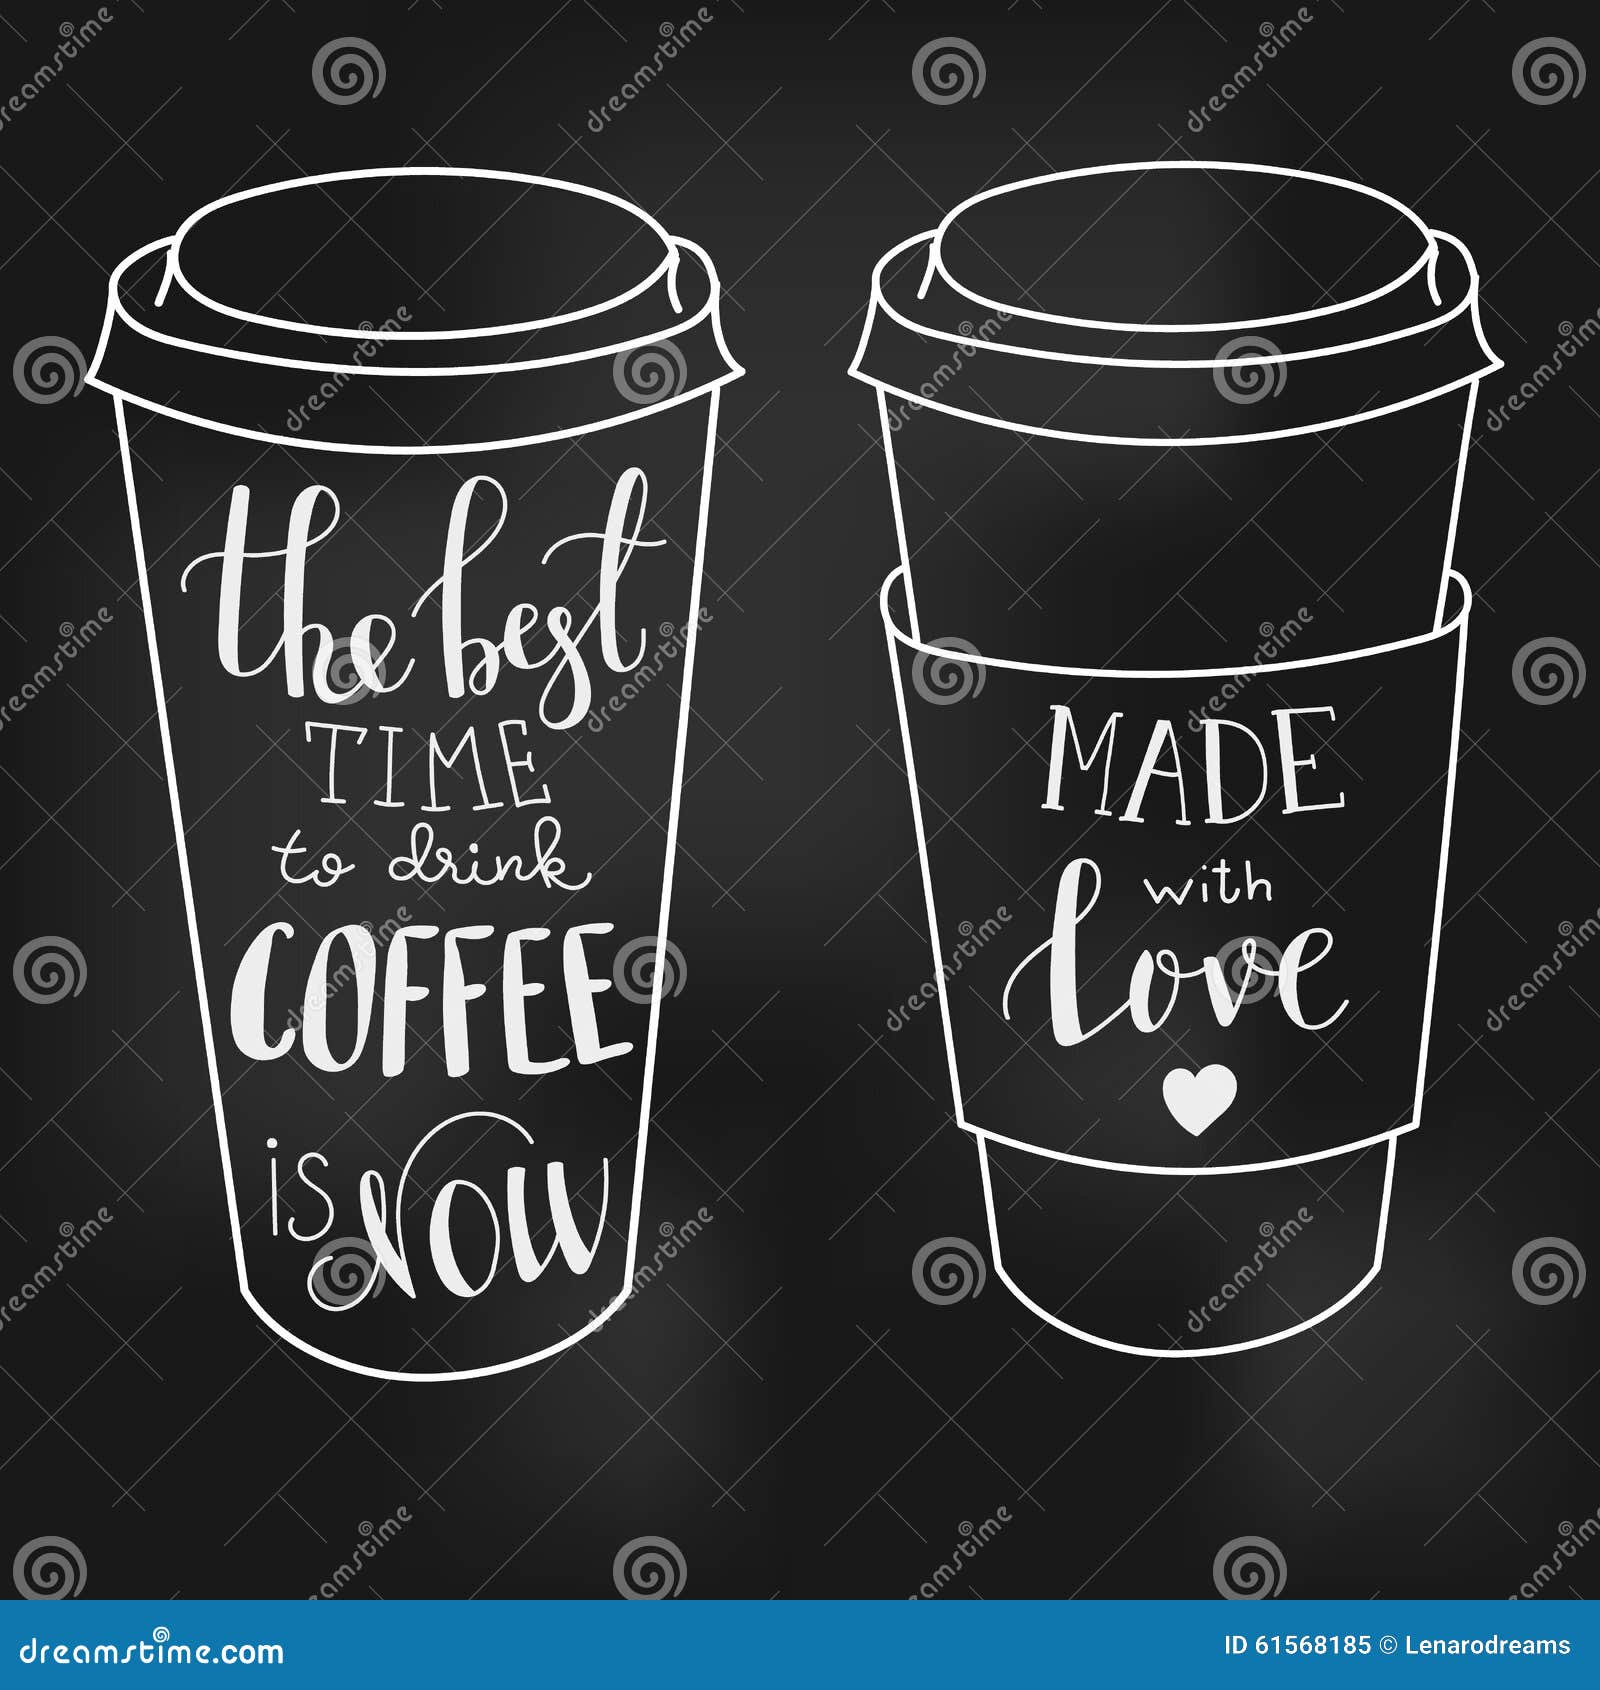 Как будет по английски стакан. Стакан кофе мелом на доске. Кофе с собой мелом на доске. Стакан для кофе. Надписи на стаканчиках для кофе.